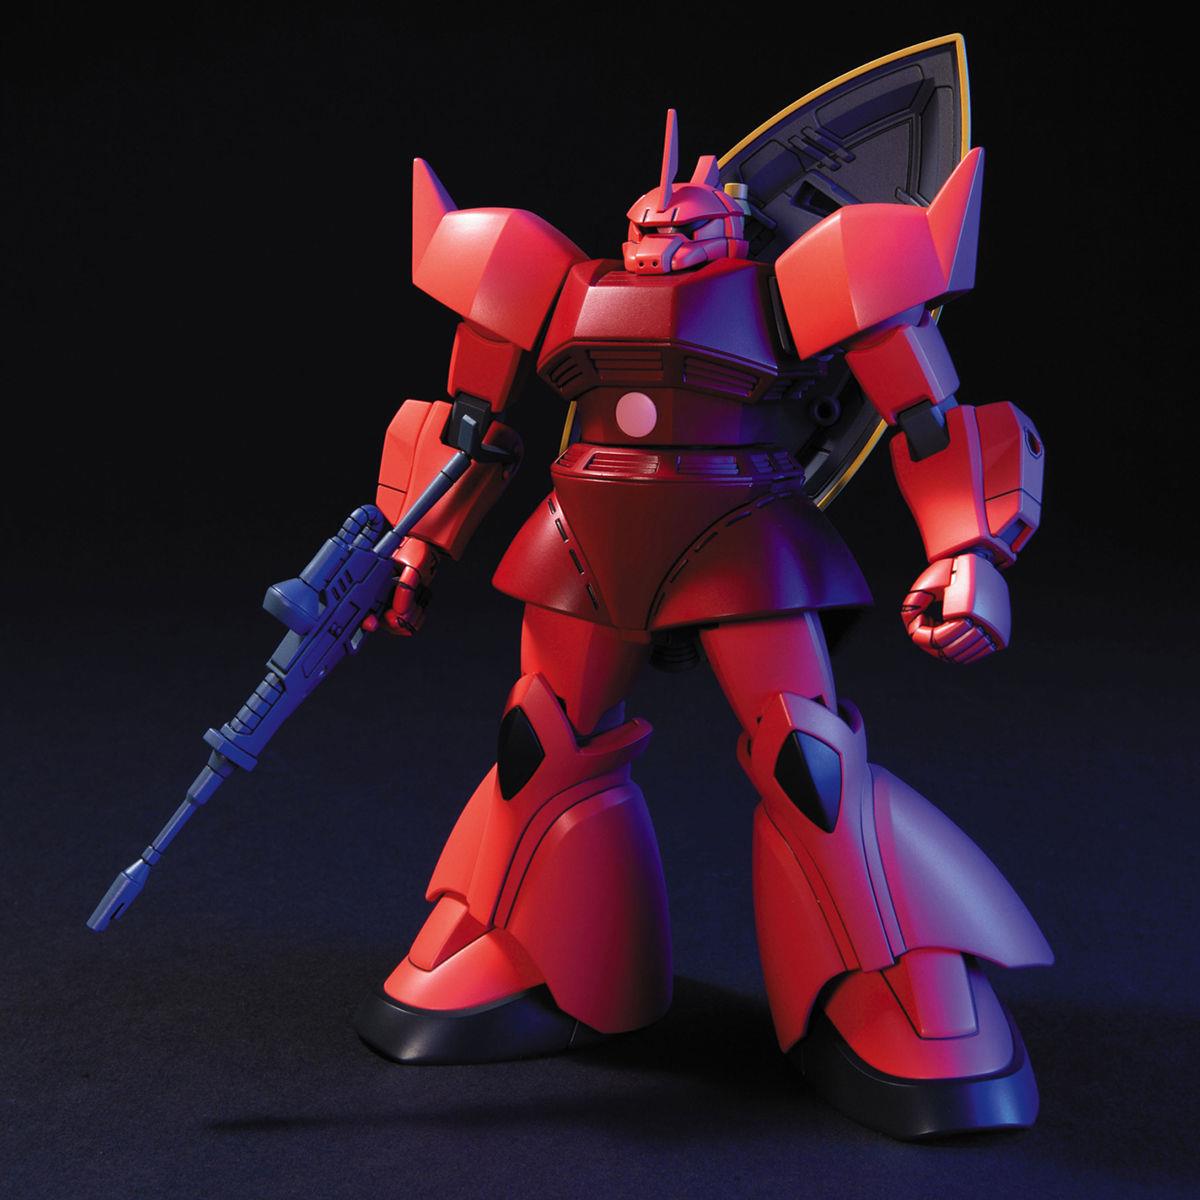 Gundam: MS-14S Gelgoog 1/144 HG Model